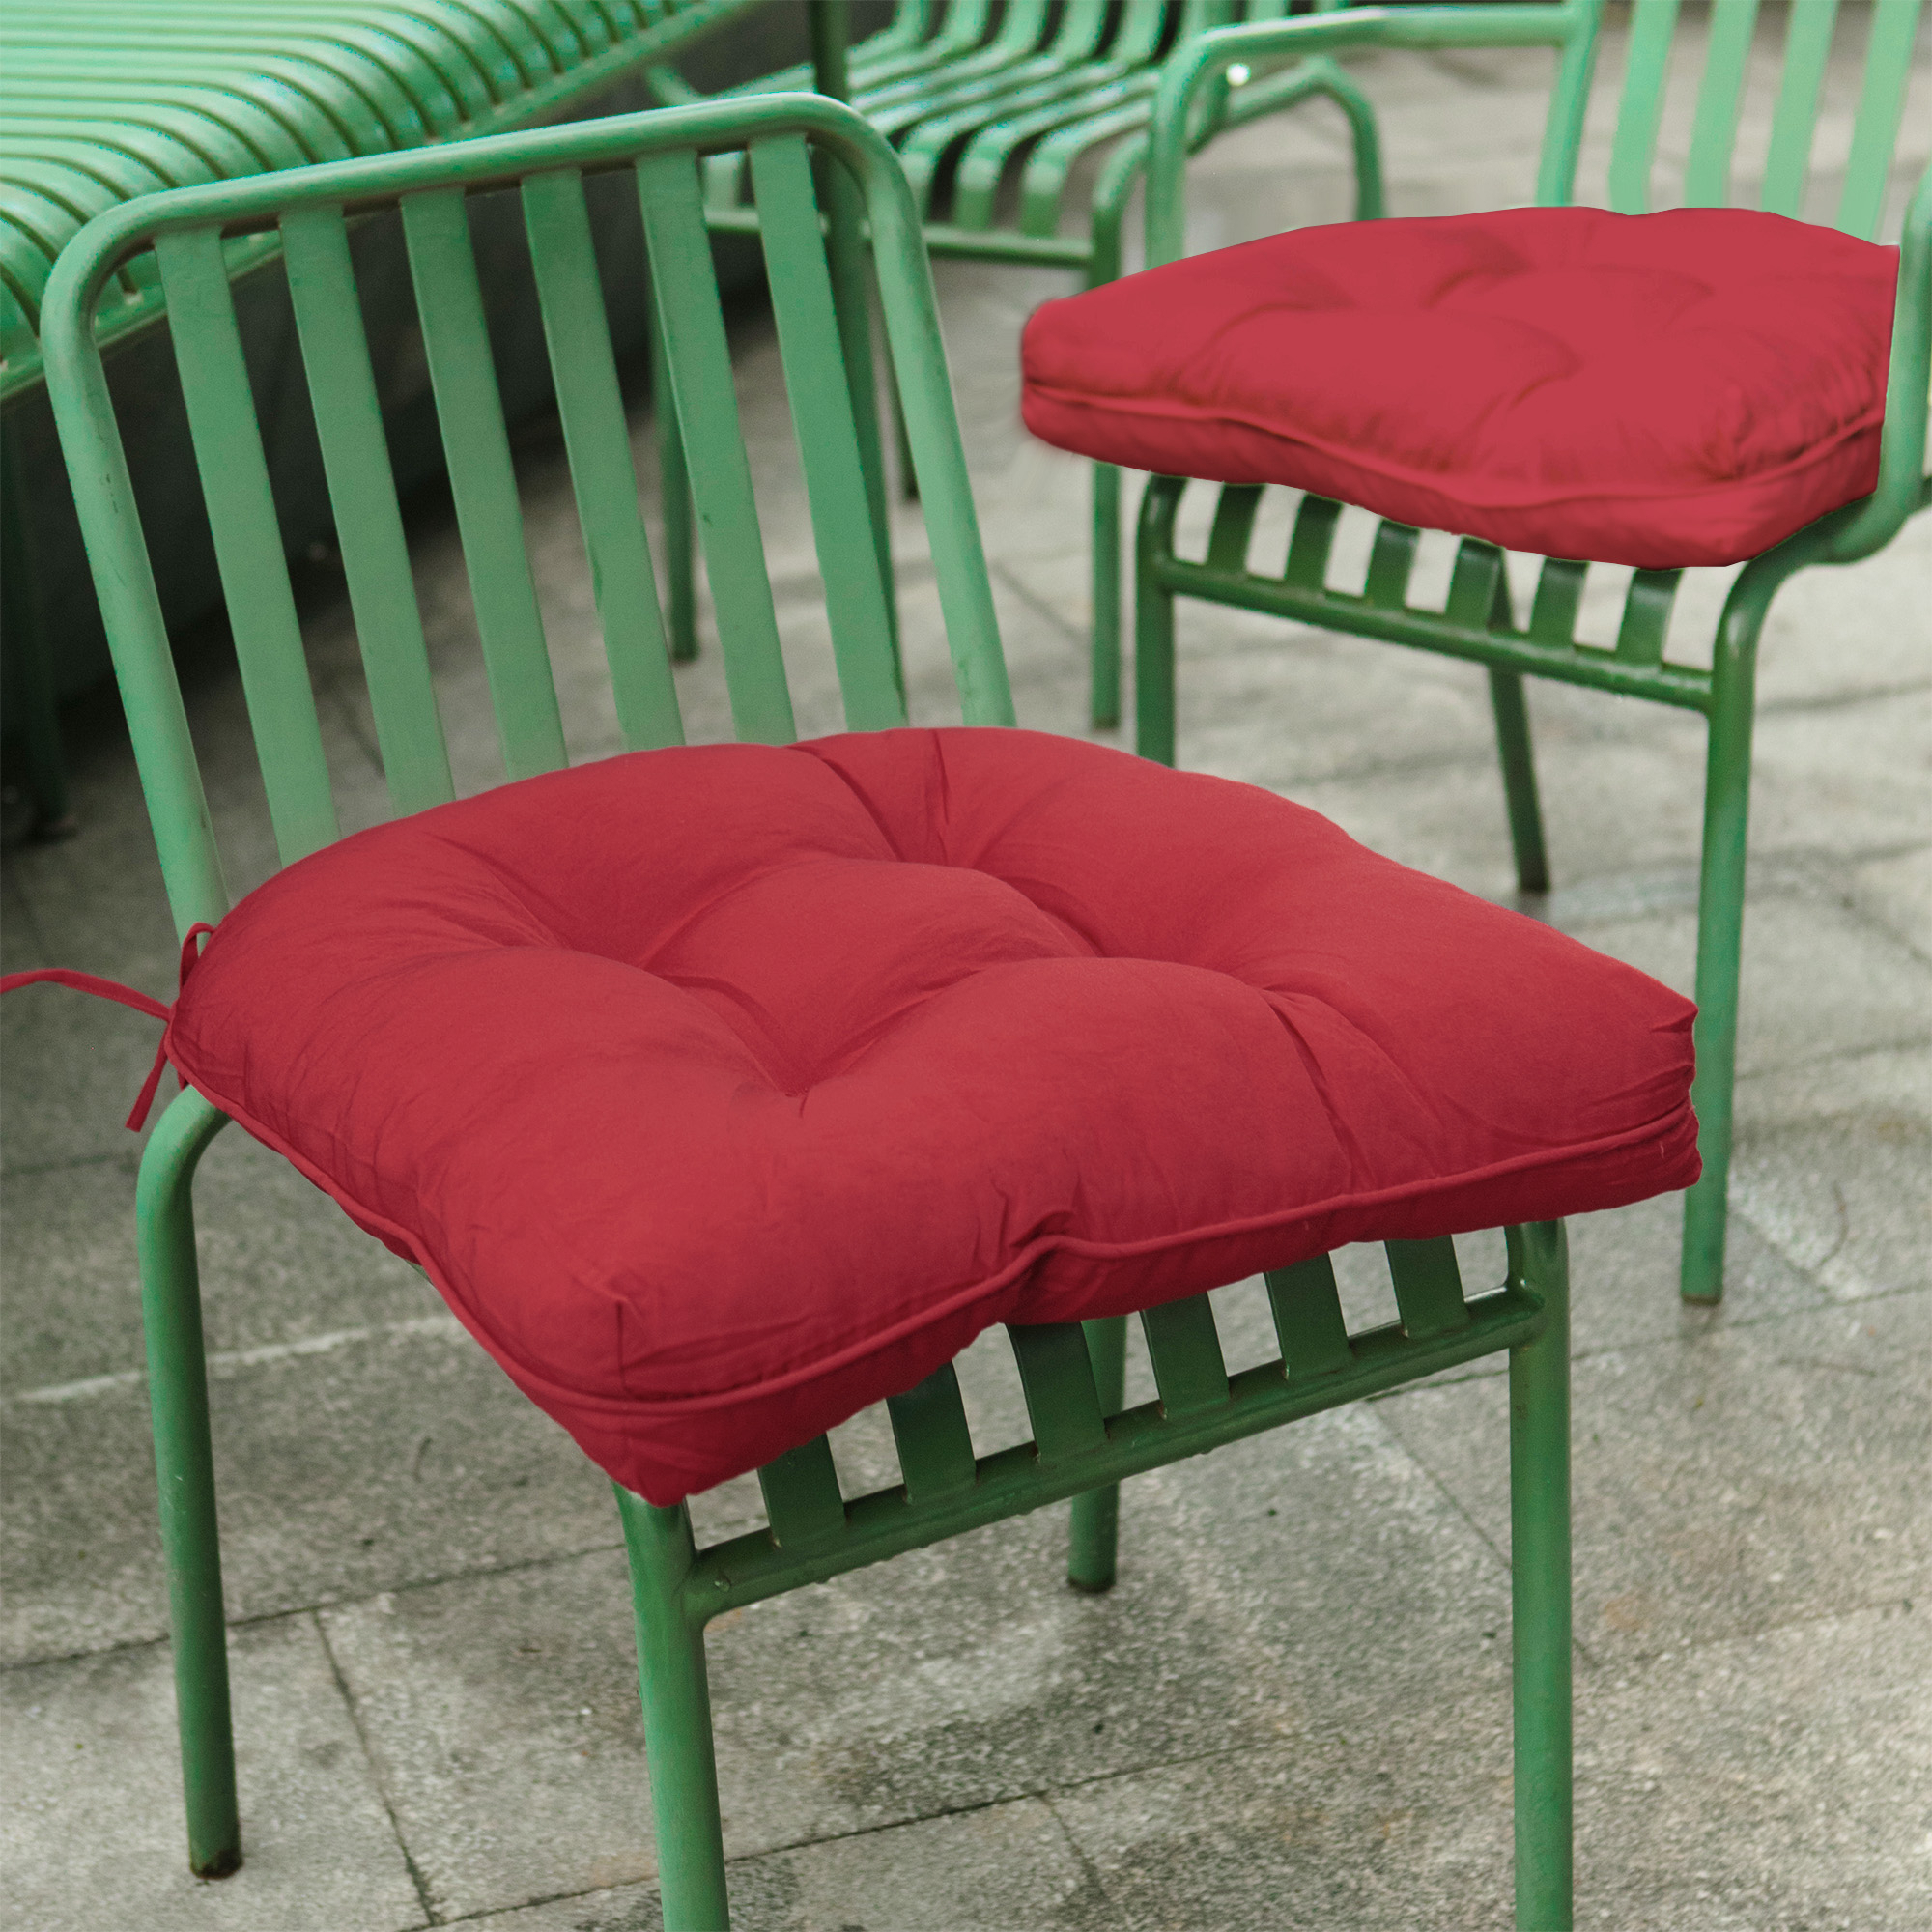 Outdoor Patio Seat Cushion Set Of 2-Waterproof Indoor Outdoor Cushion - Dark Gray